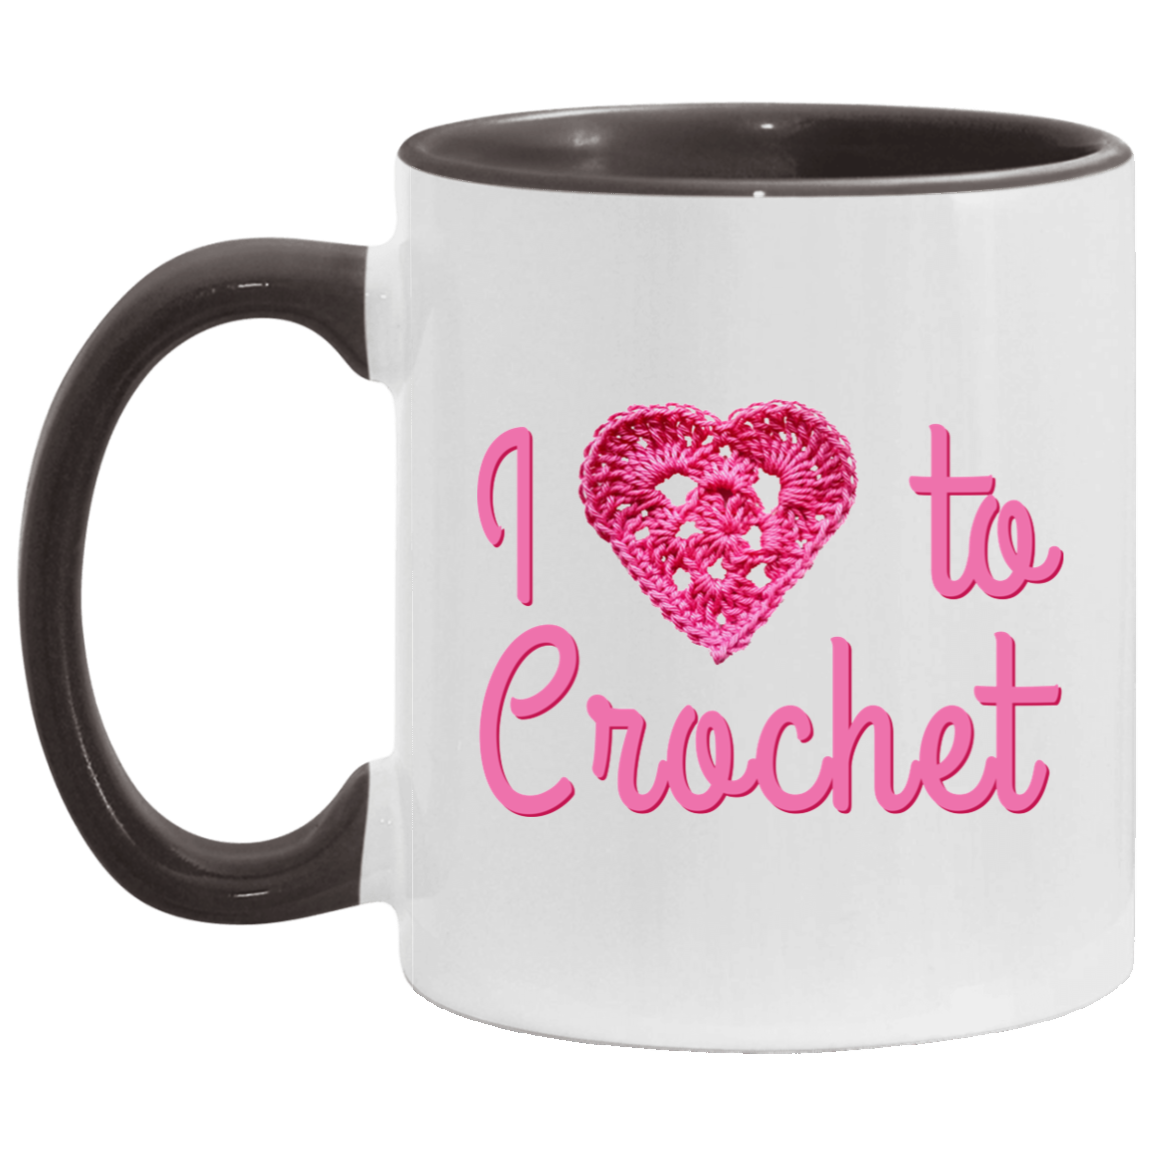 I Heart to Crochet Mugs